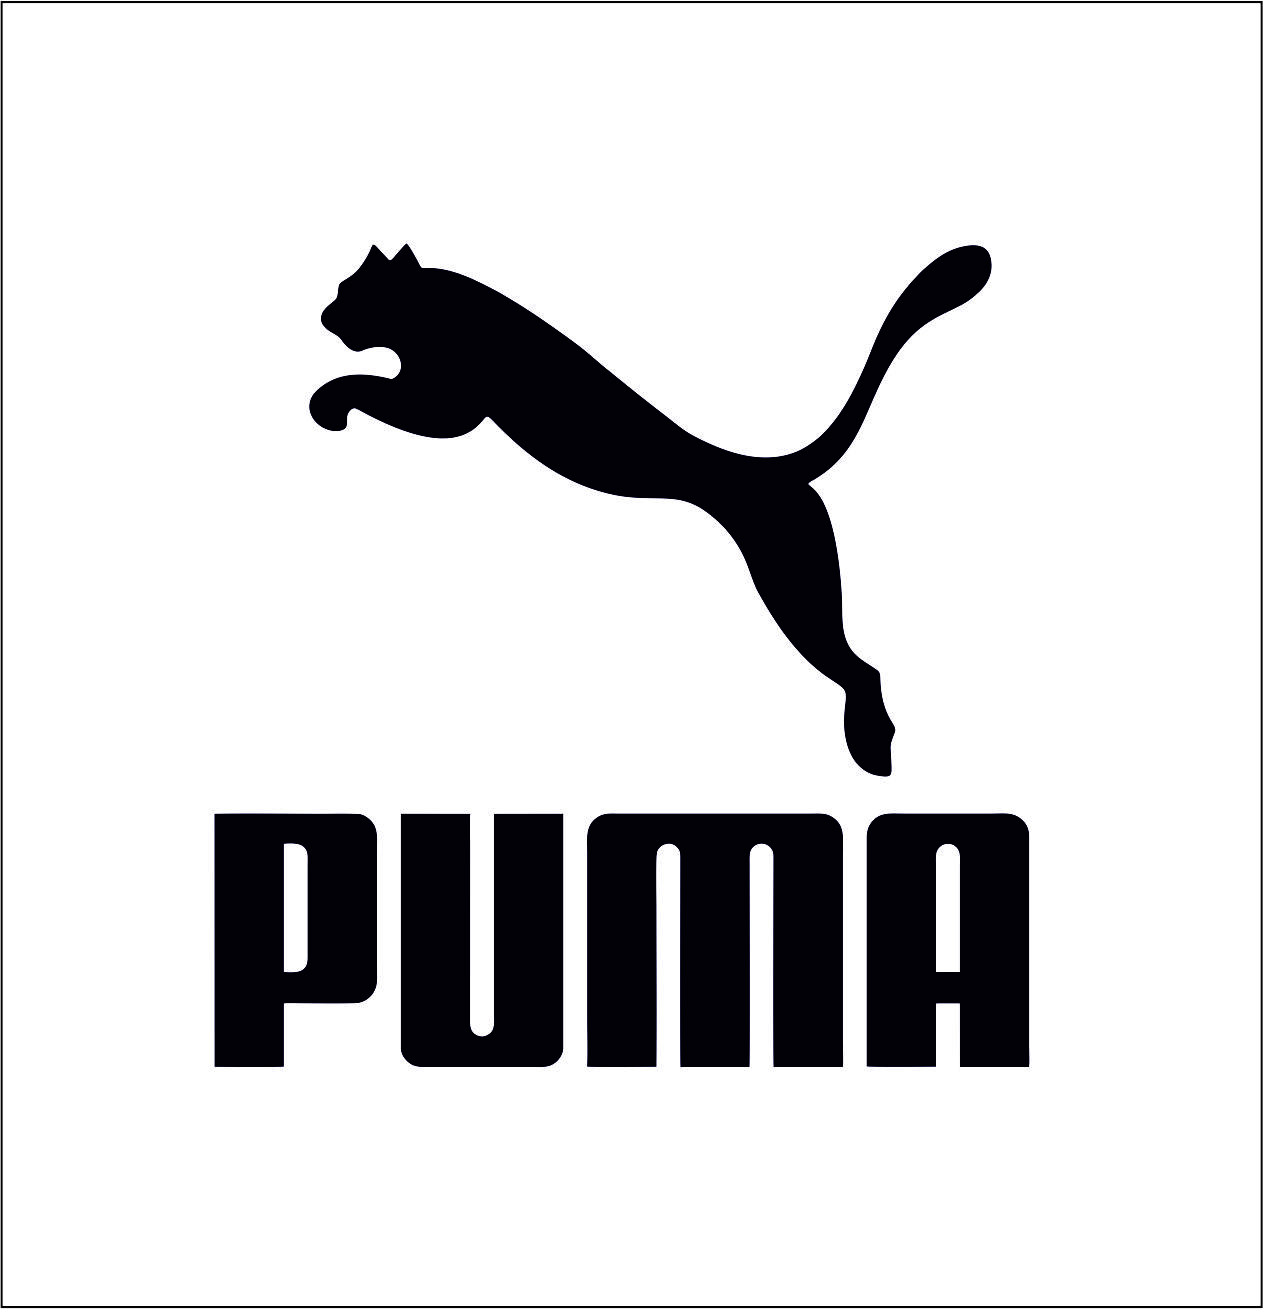 Puma Bundle Svg, Puma Logo Svg, Puma Brand Logo Svg, Fashion Logo Svg, File  Cut Digital Download,Luxury Brand Logo Svg